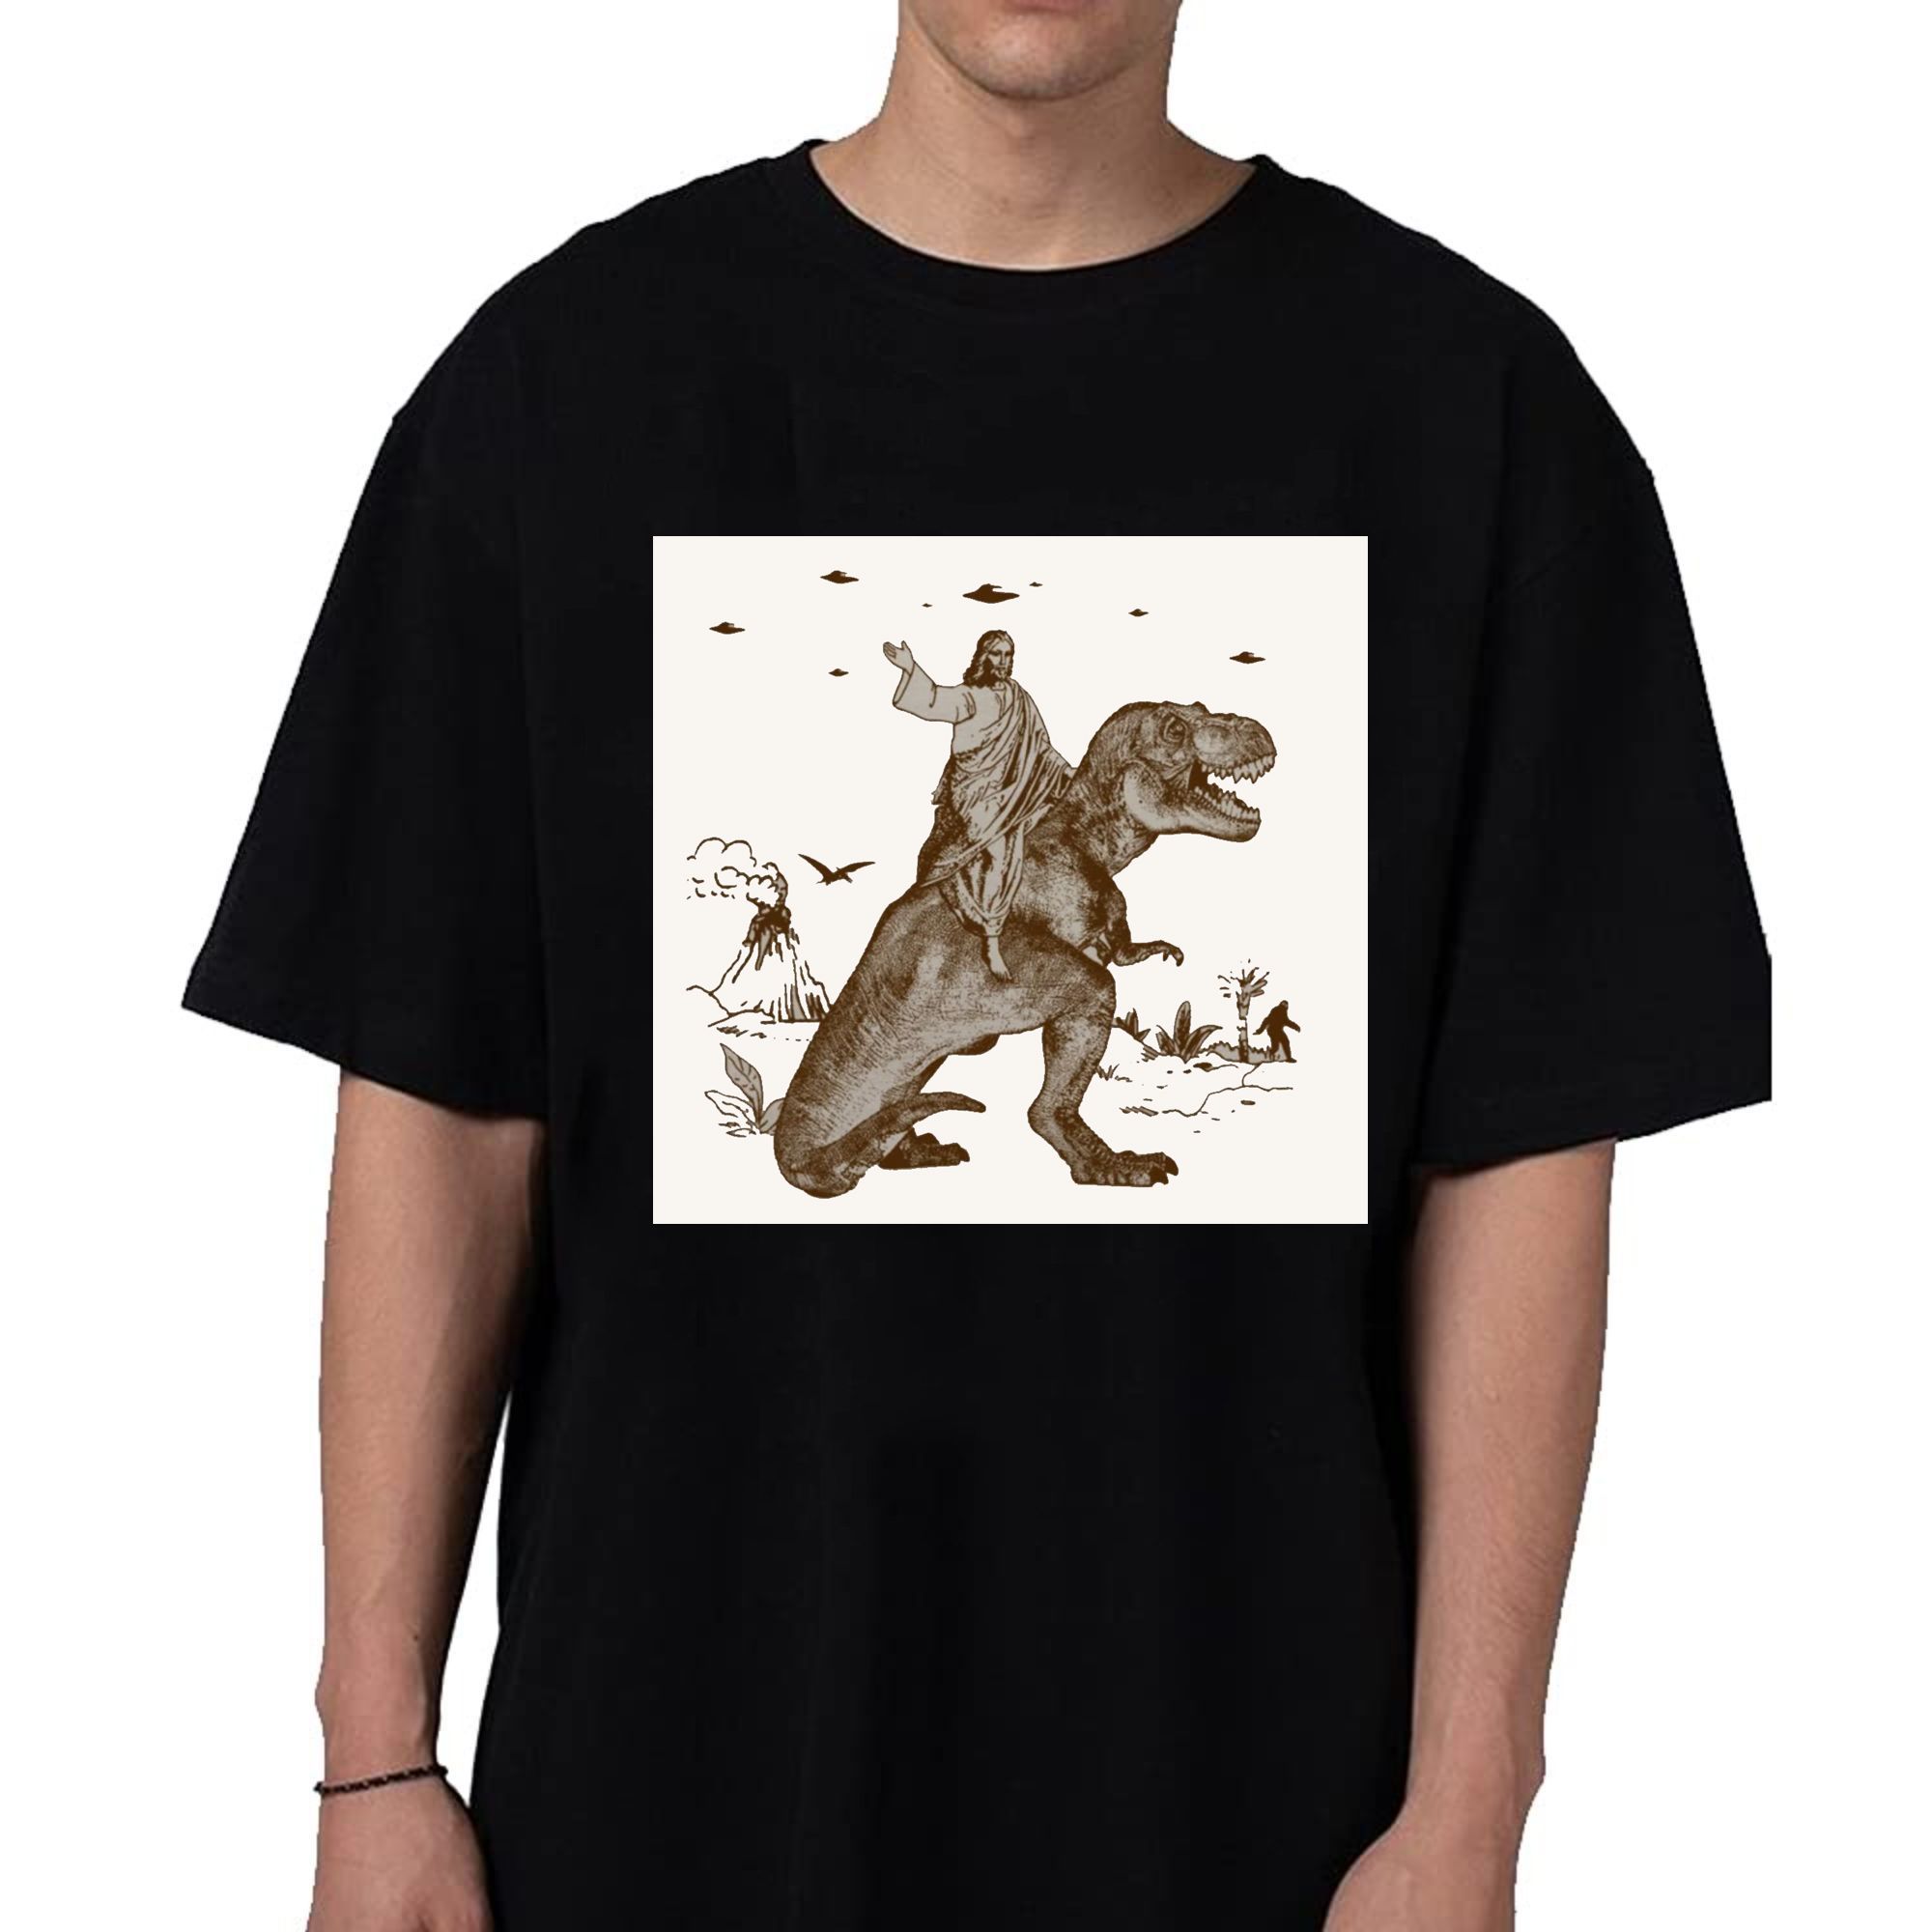 Jesus Riding Dinosaur T Shirt T Shirt Funny T Shirts Offensive T Shirt Cool T Shirts Shirts 90s Graphic Tee Men Women Tee